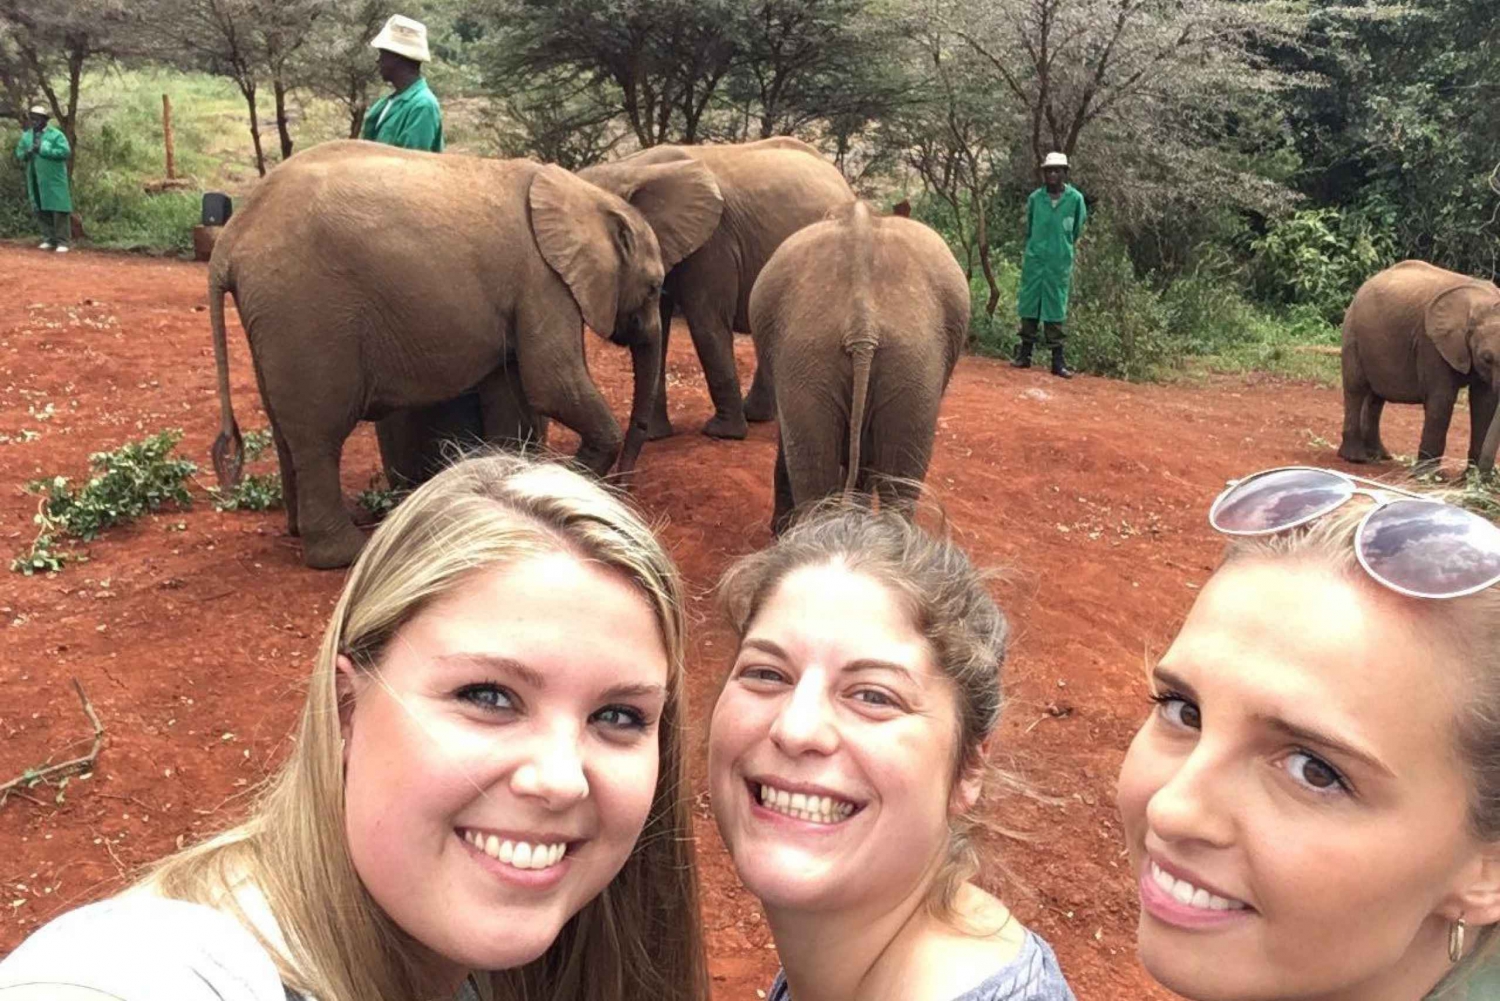 From Nairobi: Elephant Orphanage and Giraffe Center Tour